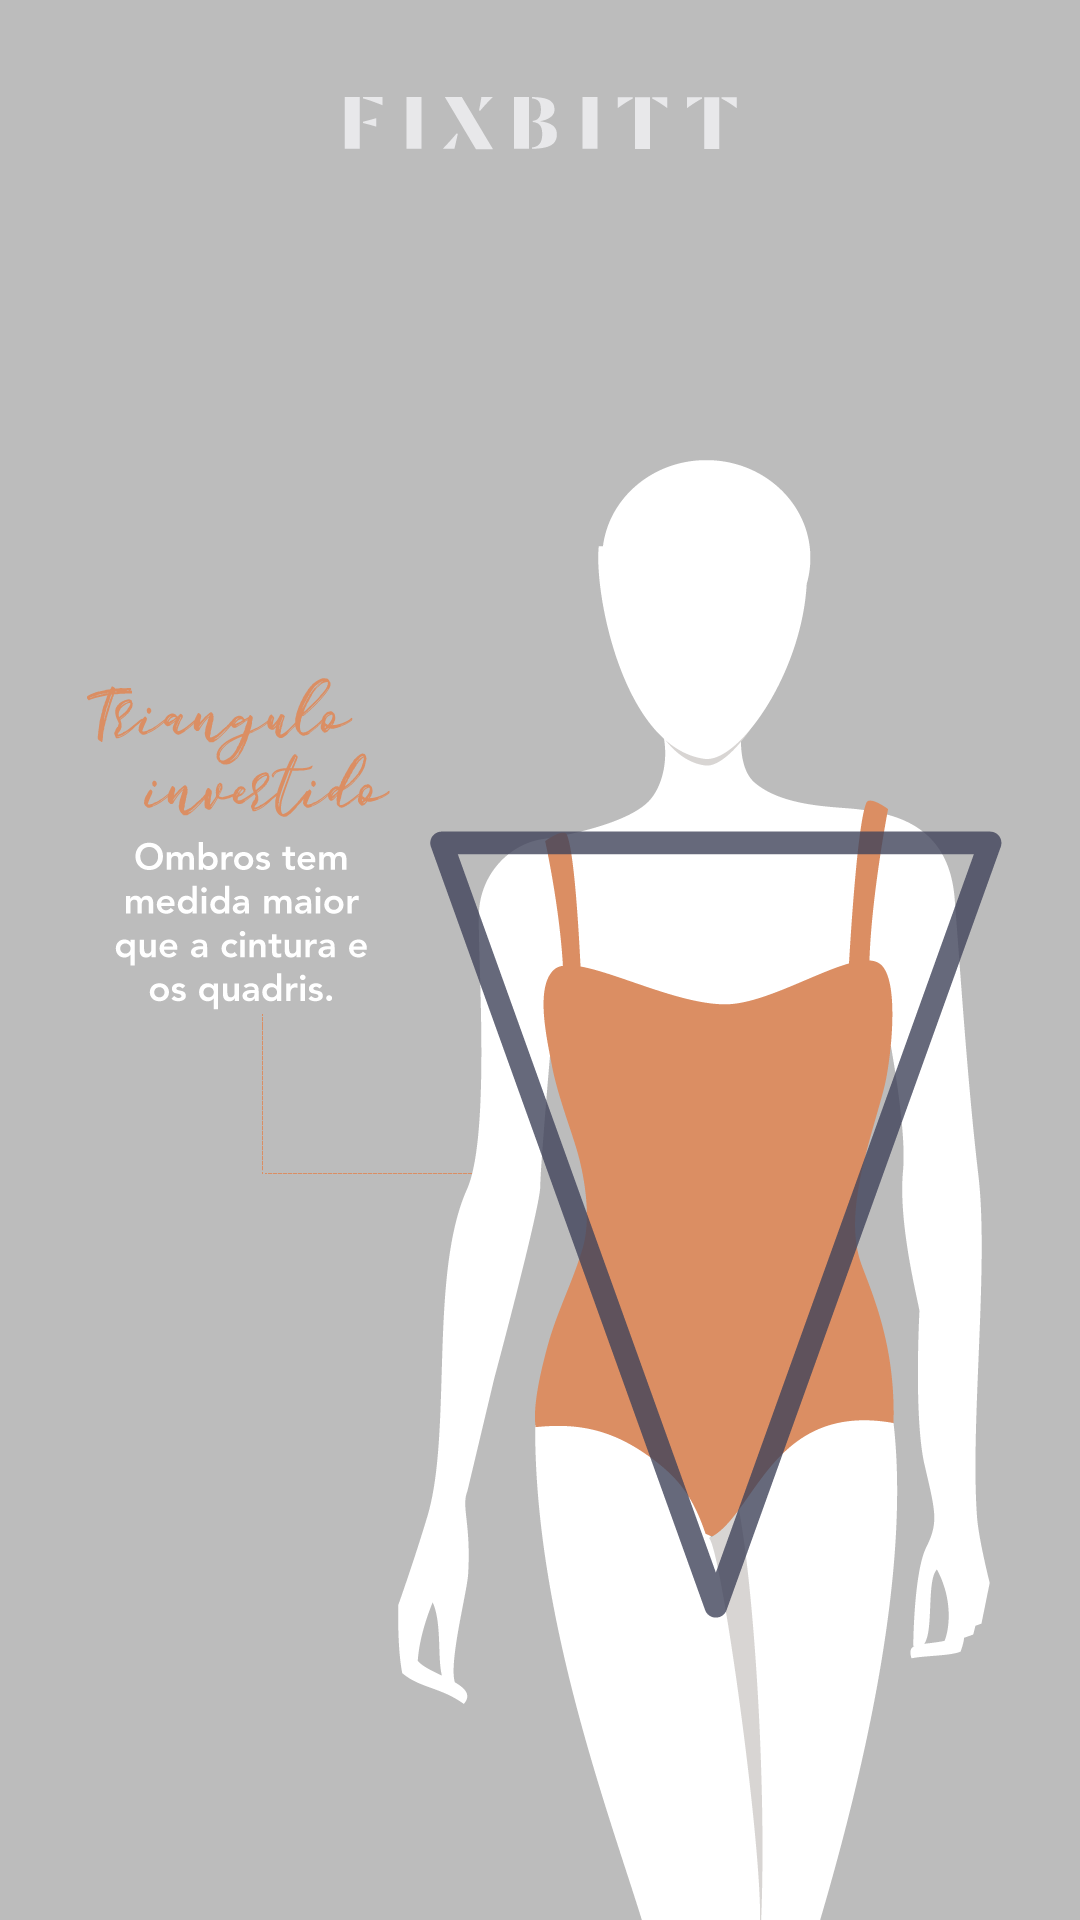 Tipos de corpo  Triângulo invertido - Fixbitt